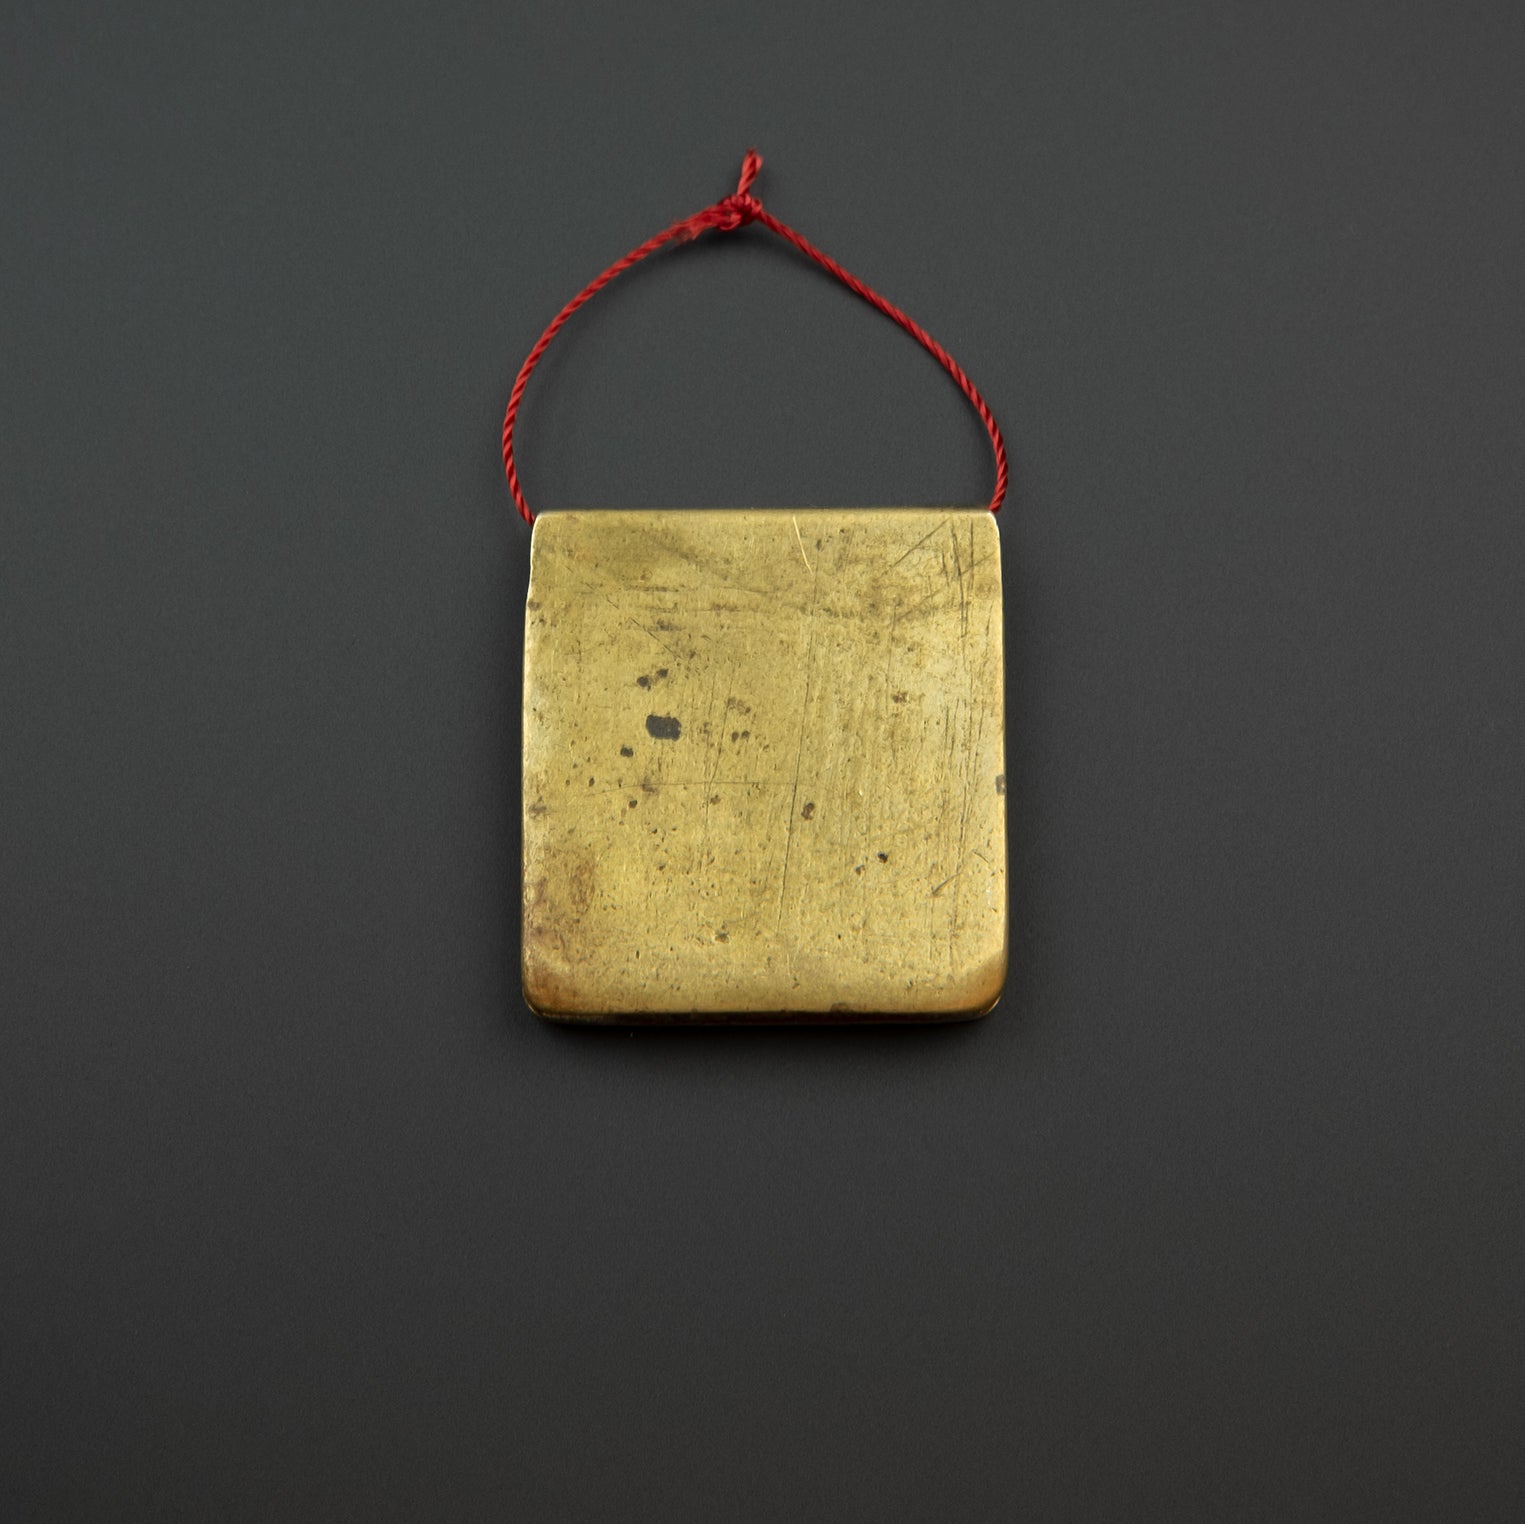 Antique Silver Kitab Amulet, Ida ou Semlal, Morocco